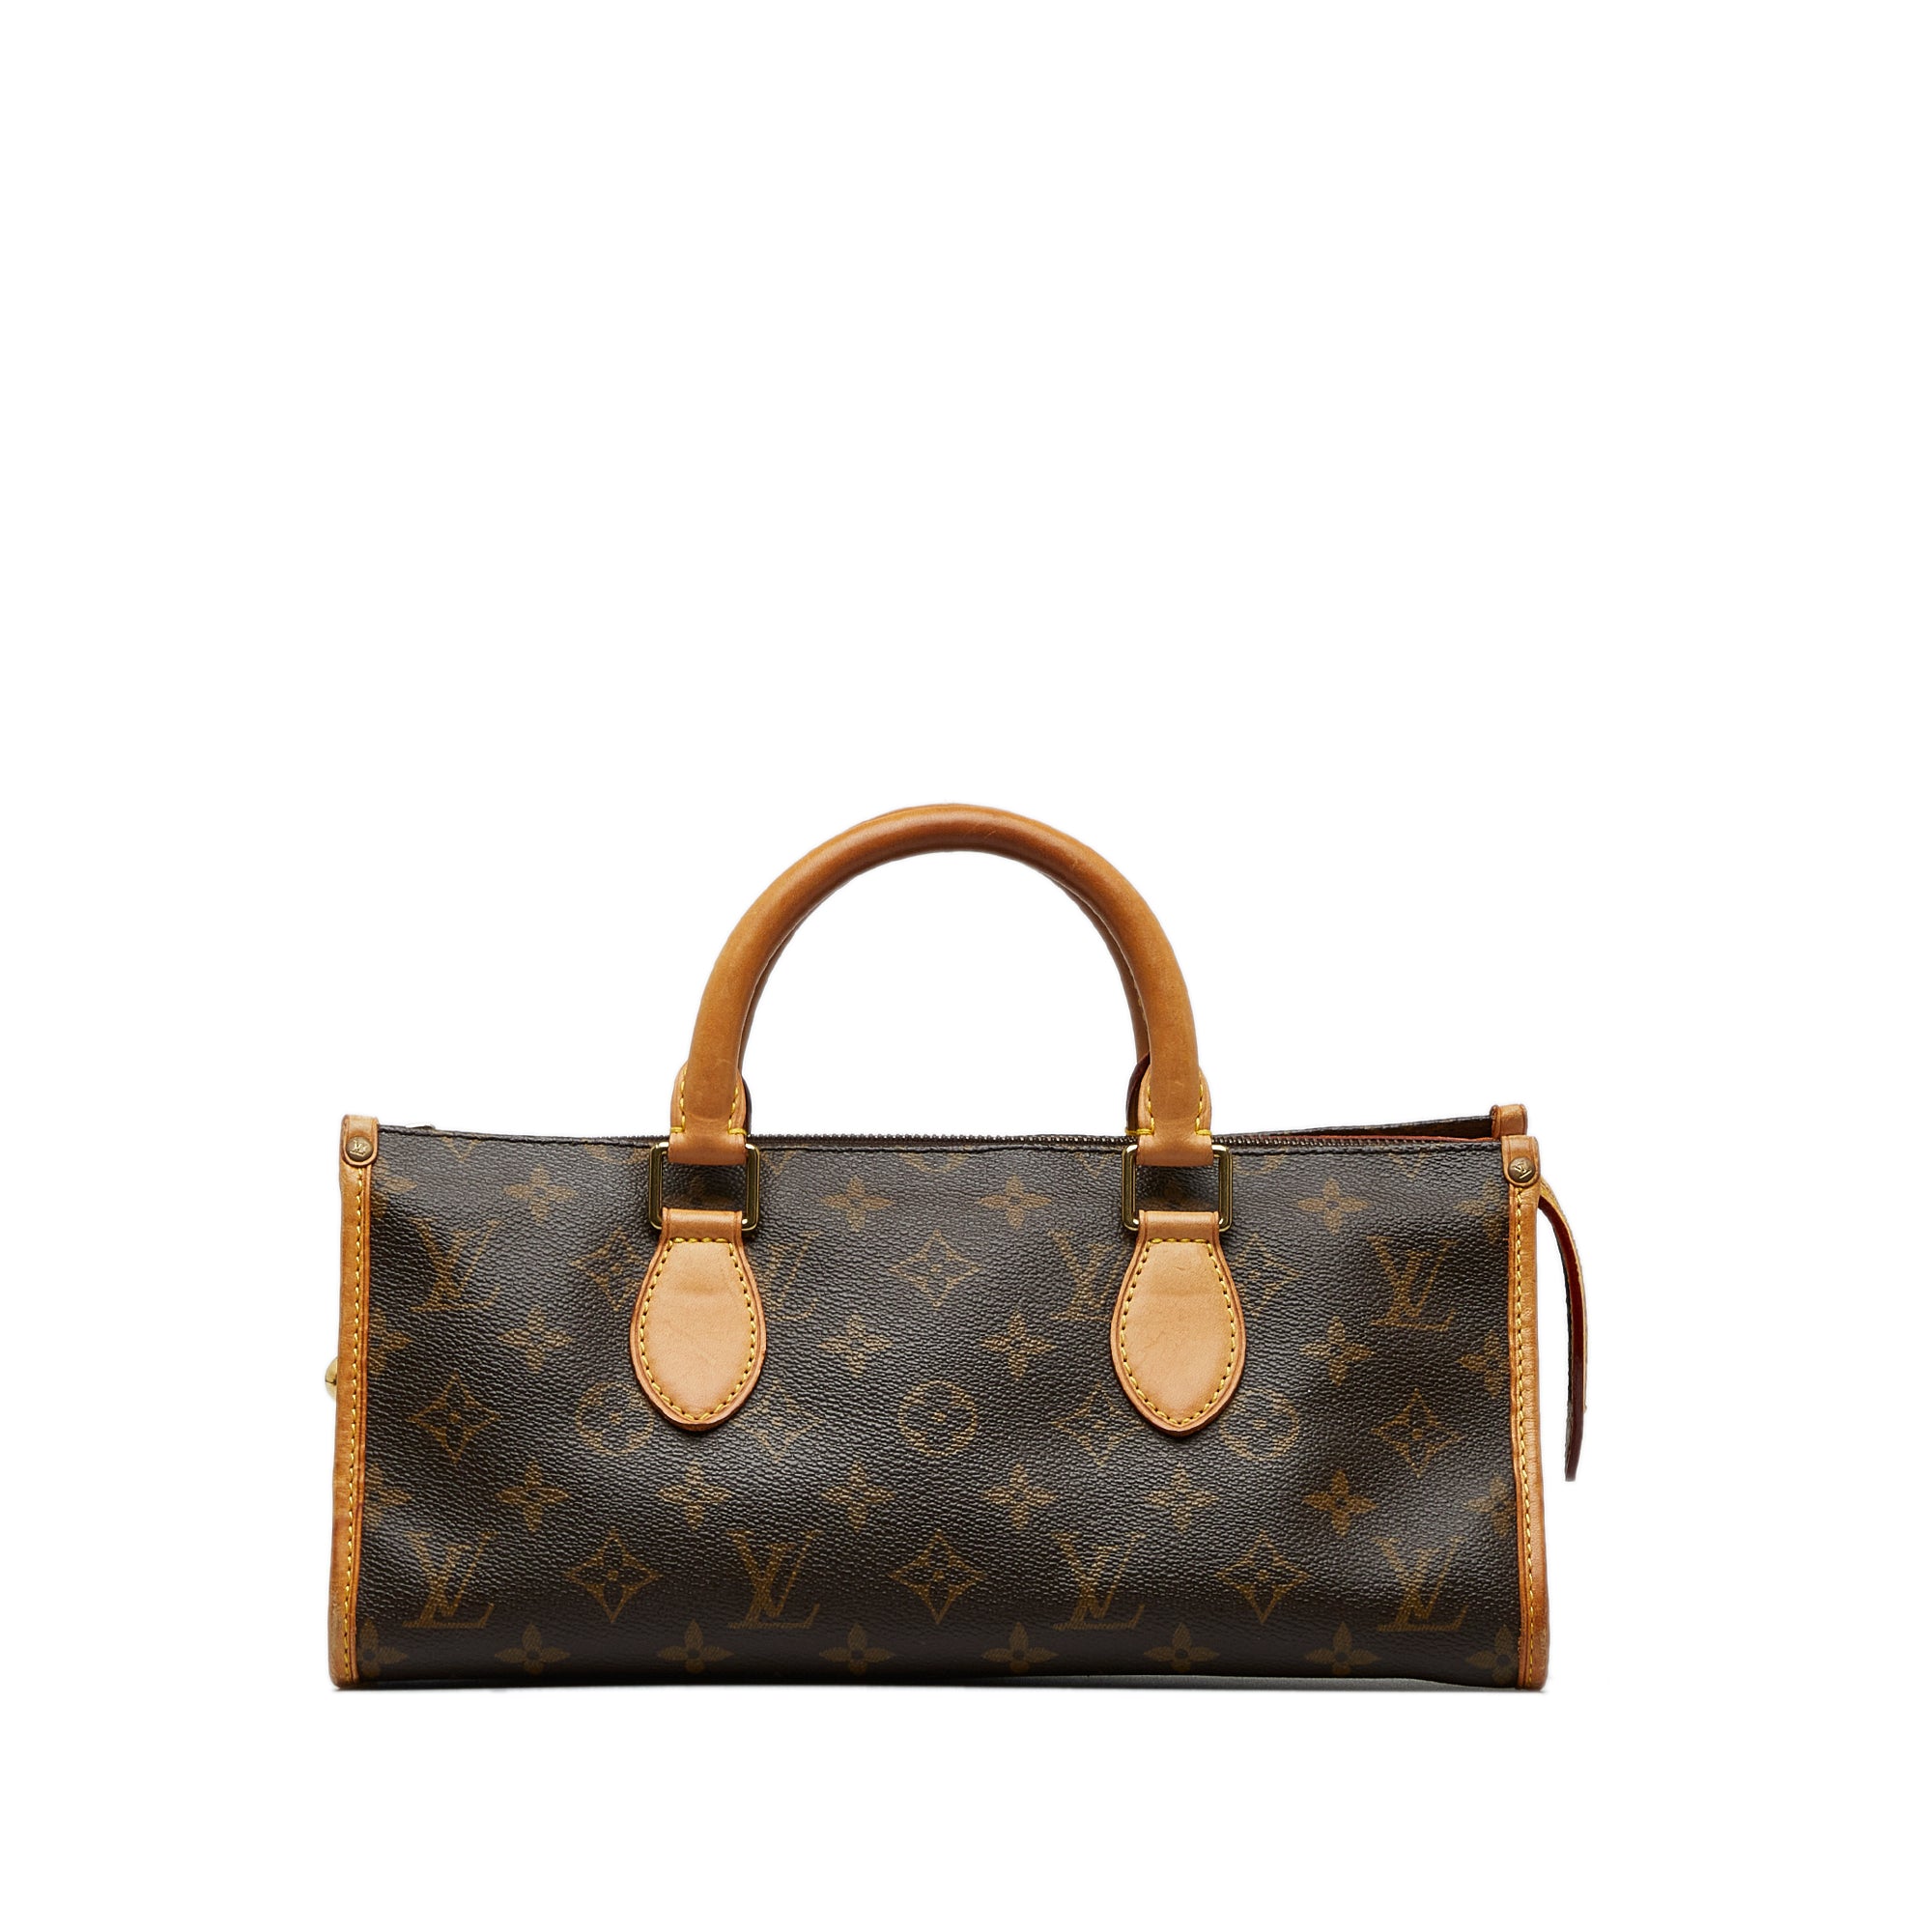 Louis Vuitton 2000 pre-owned monogram Speedy 25 handbag